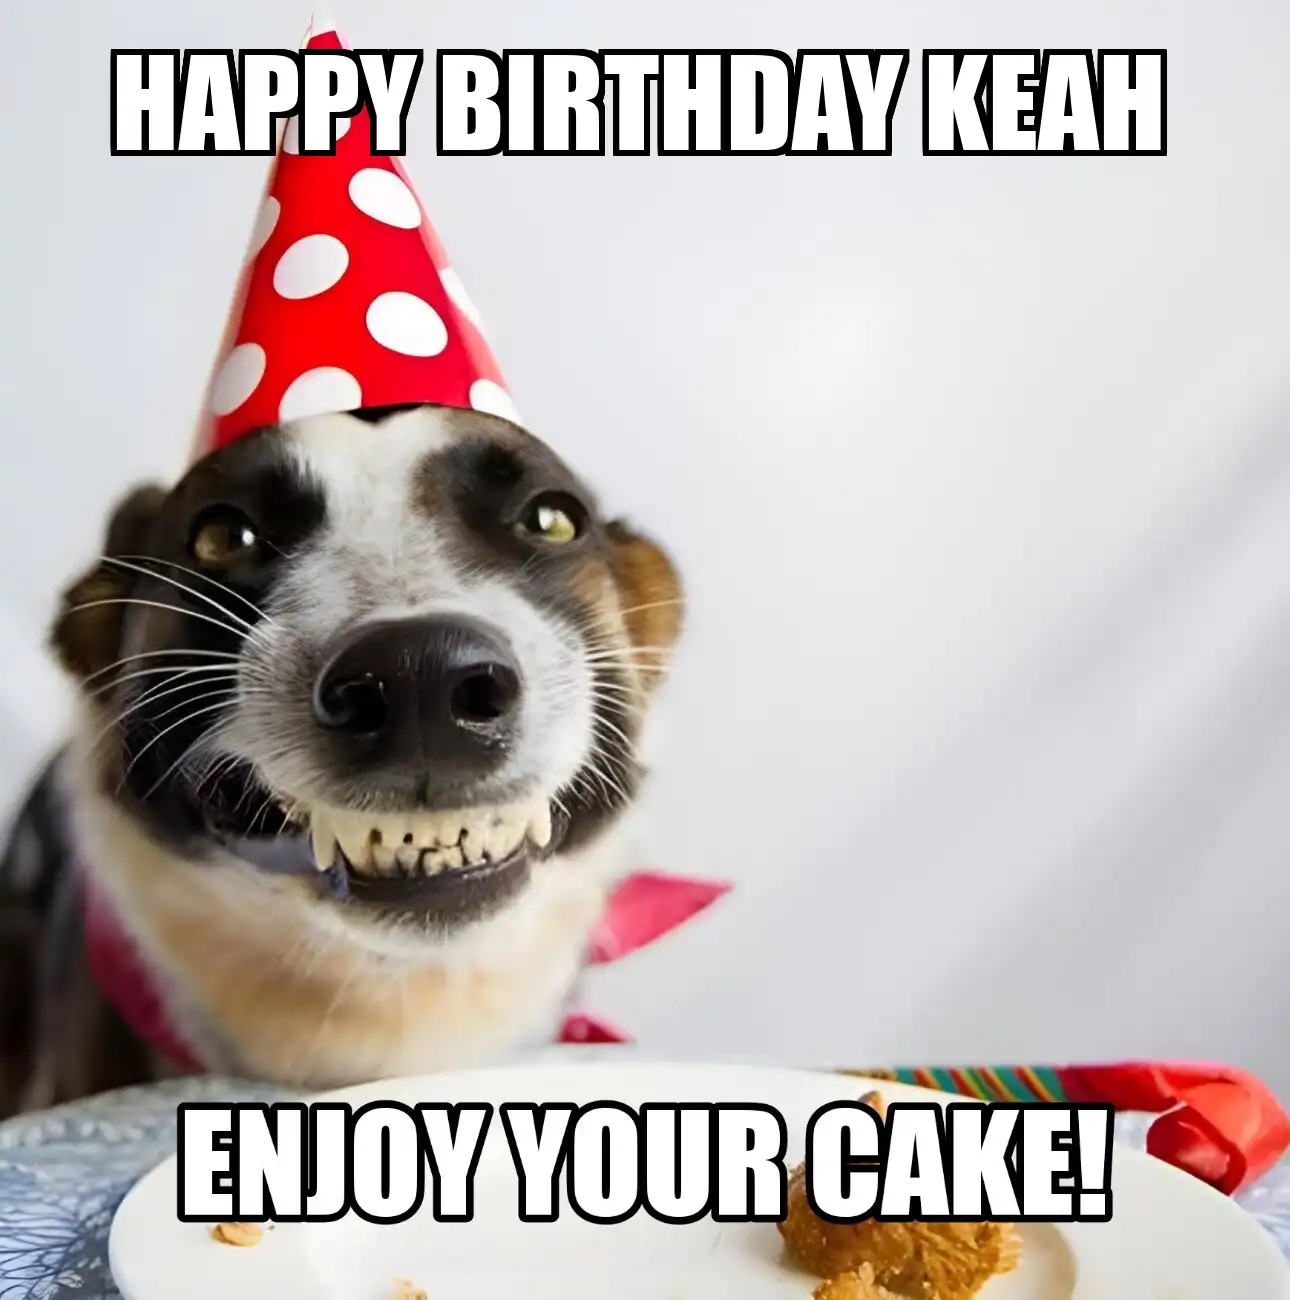 Happy Birthday Keah Enjoy Your Cake Dog Meme